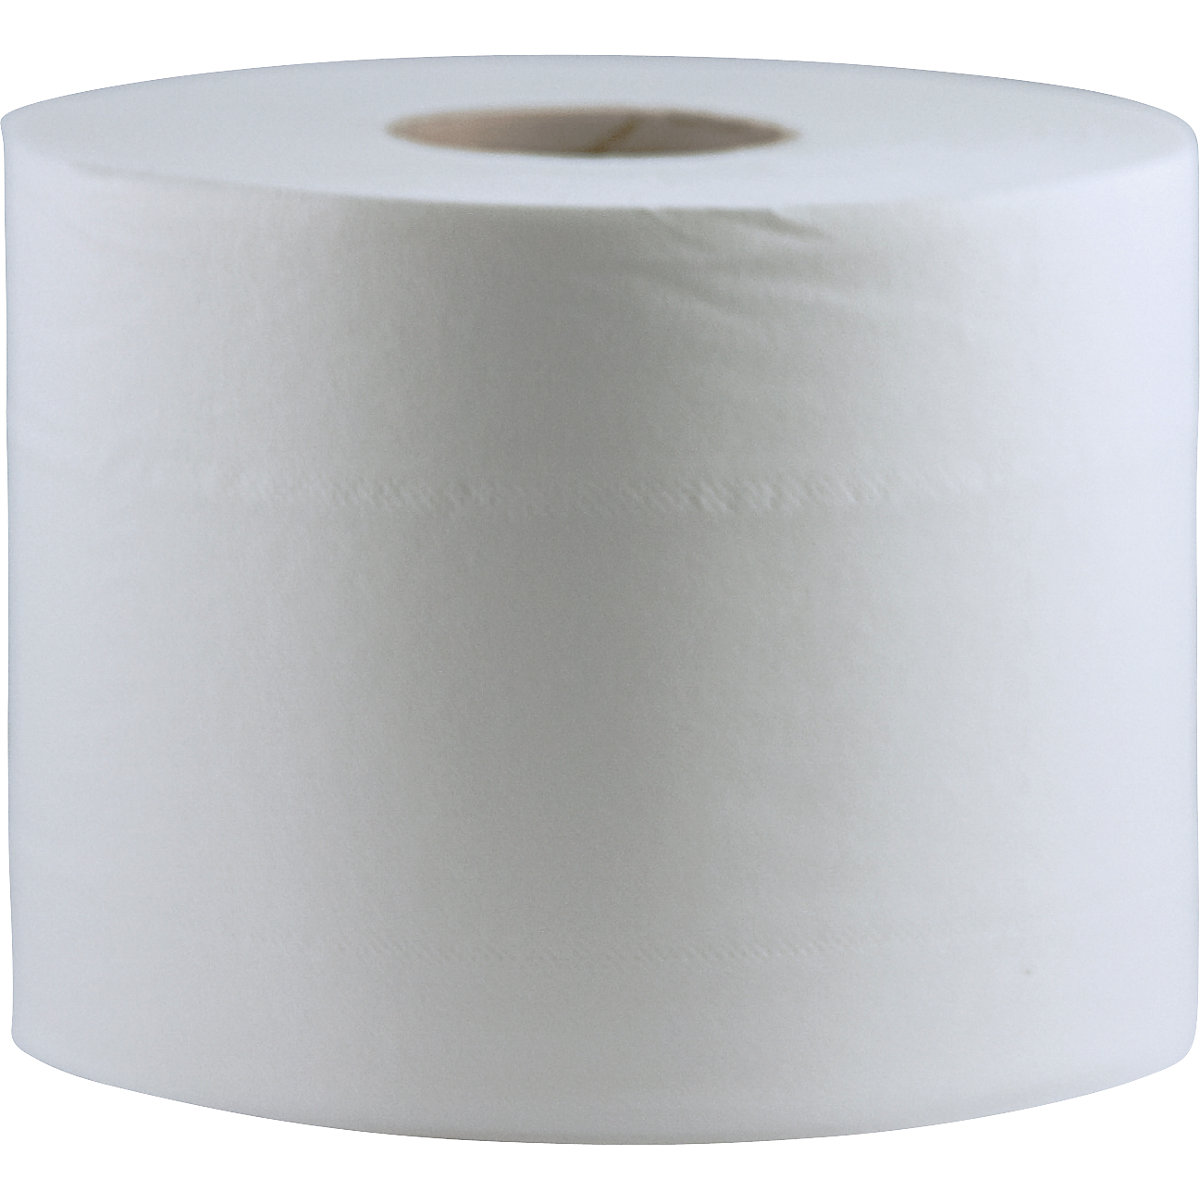 Toaletní papír – CWS